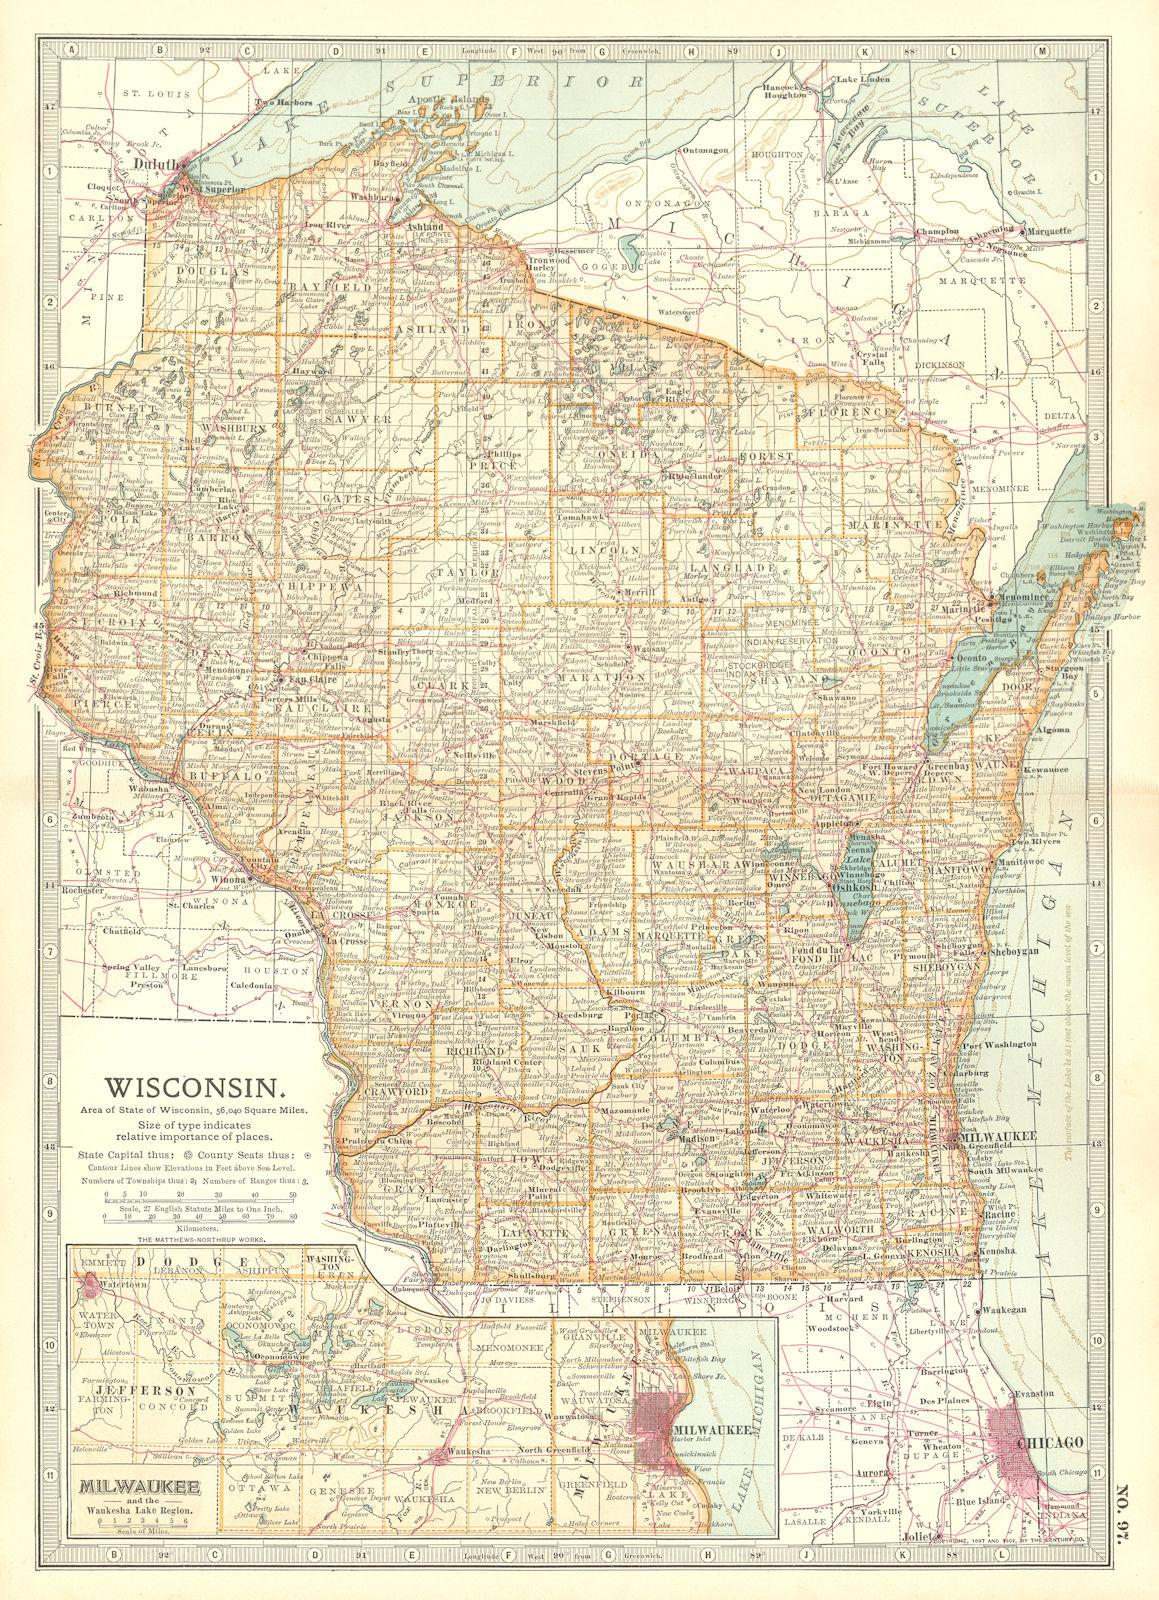 WISCONSIN. Counties. Indian reservations. Milwaukee & Waukesha Lakes 1903 map